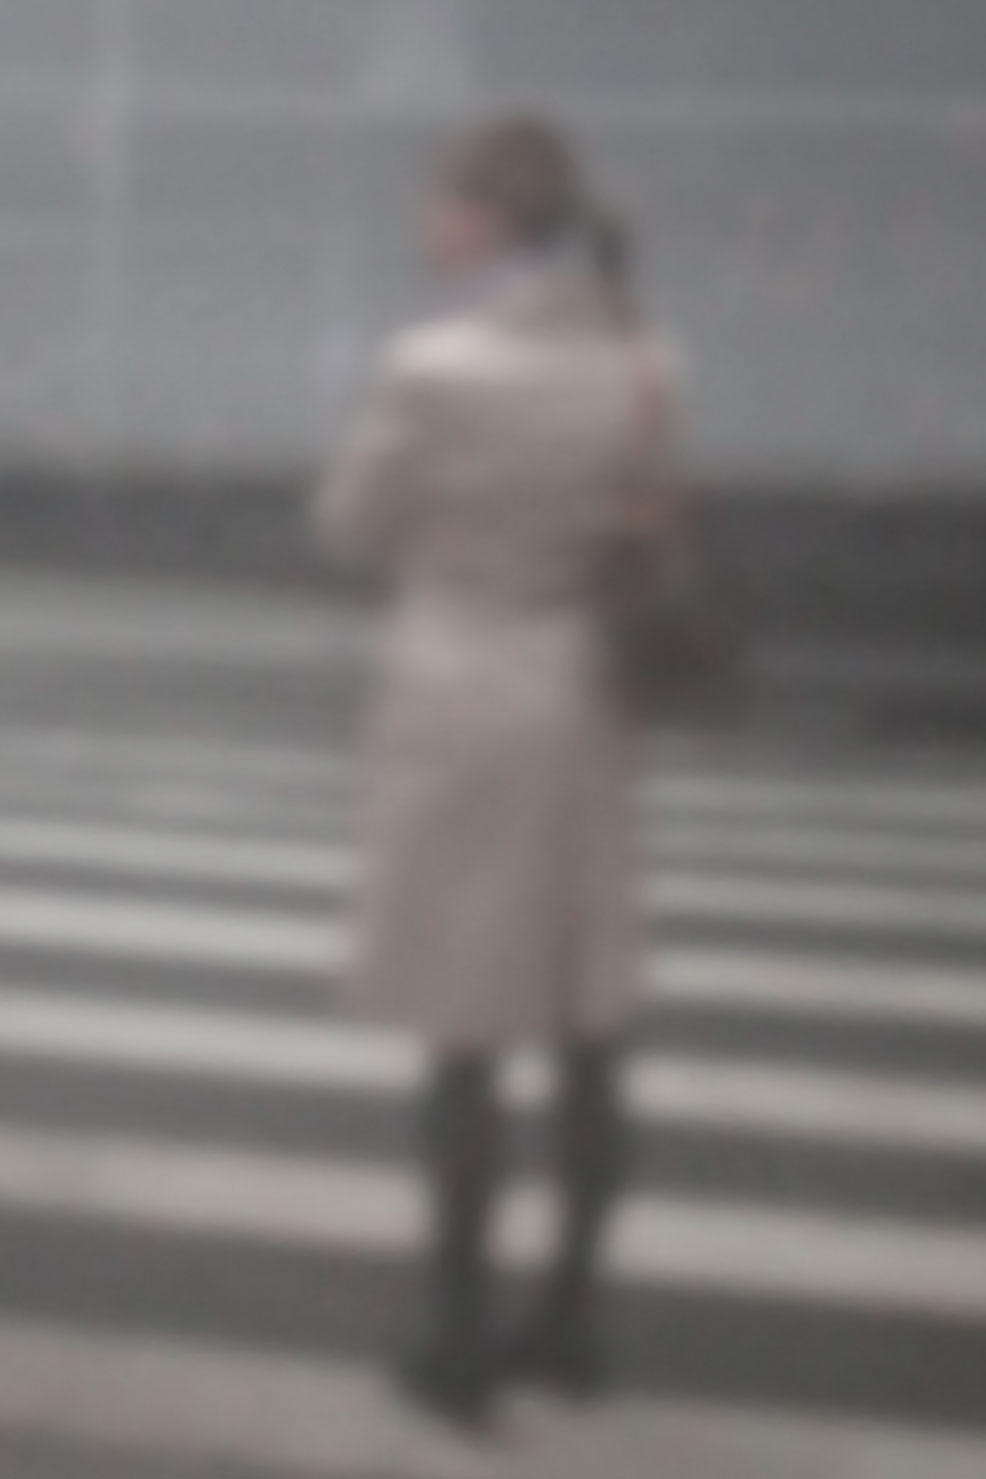 23 „Frau vor Zebrastreifen“, 2012, New York, Camera Obscura, Pigmentdruck auf Alu-Dibond